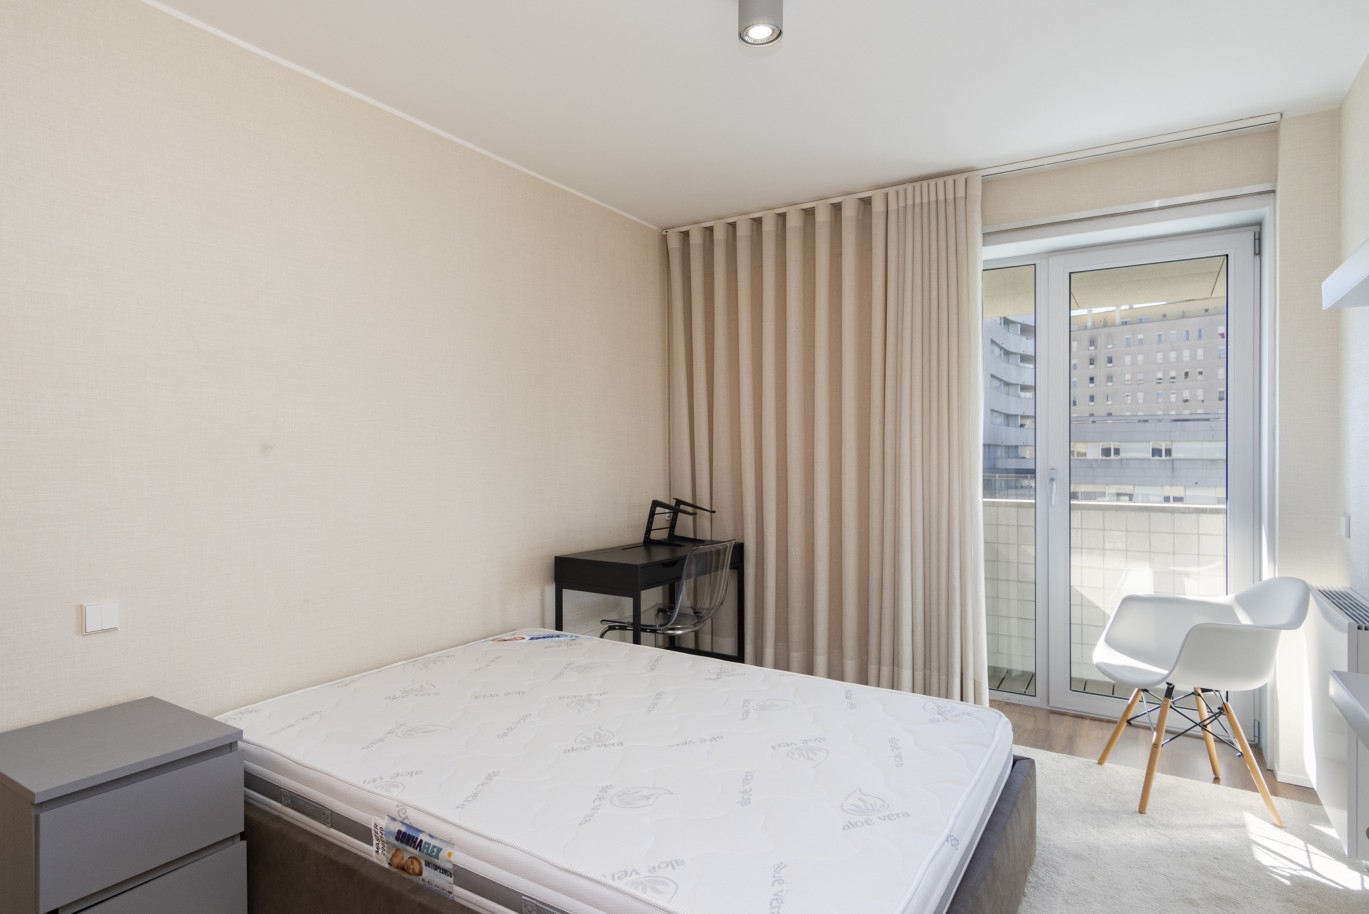 Apartamento Dúplex de 3 Dormitorios con balcón, en venta, en Boavista, Porto, Portugal_217712